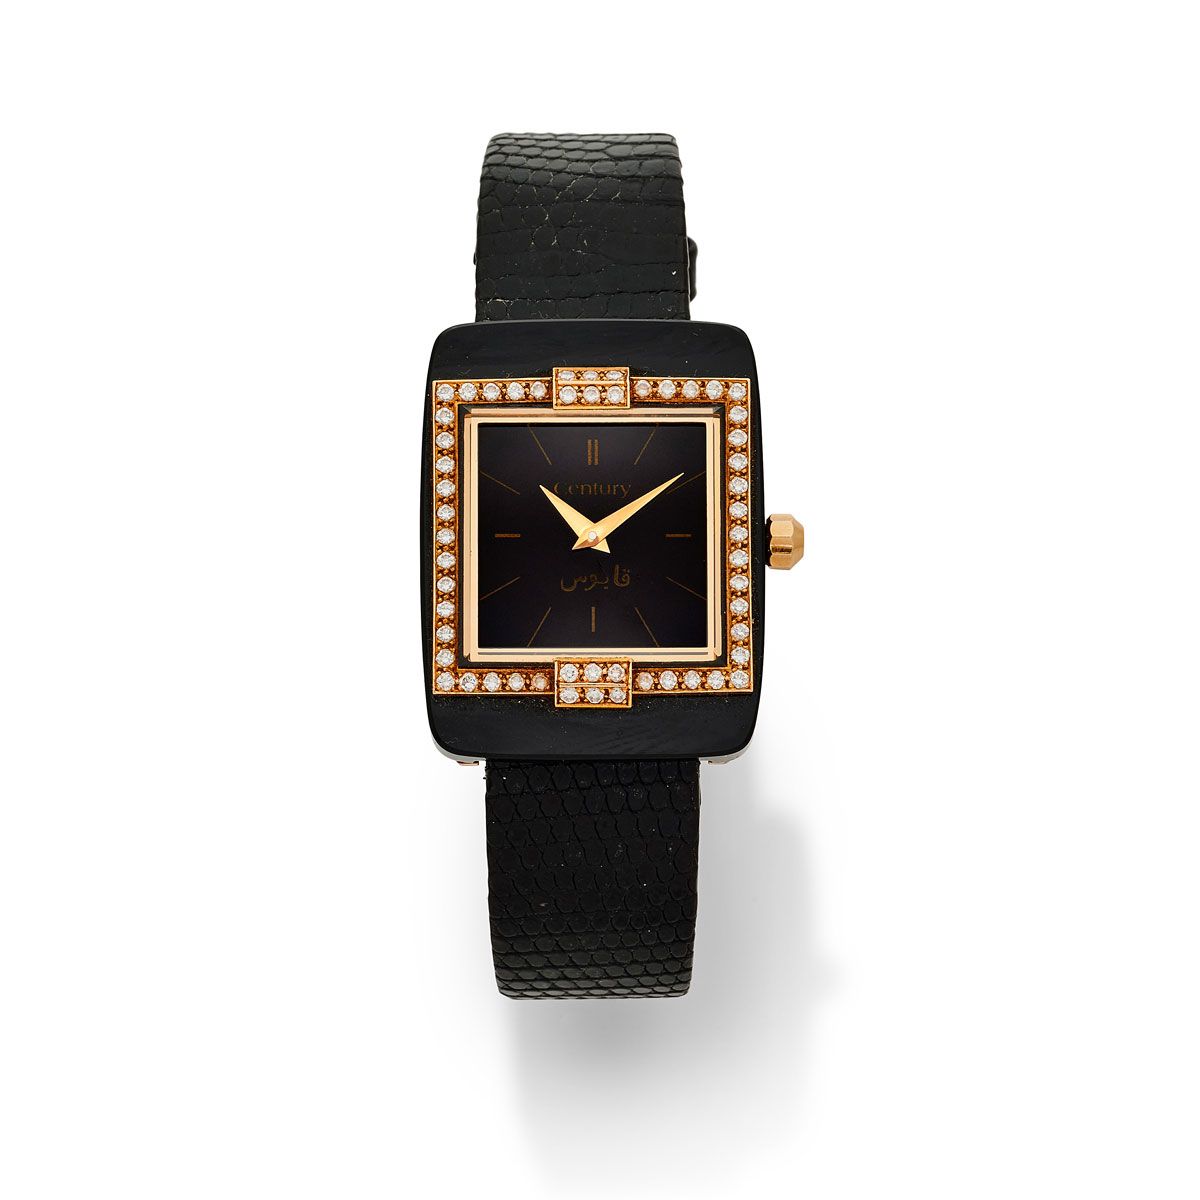 Null Century, circa 1990.

An original rectangular gold and onyx watch, diamond-&hellip;